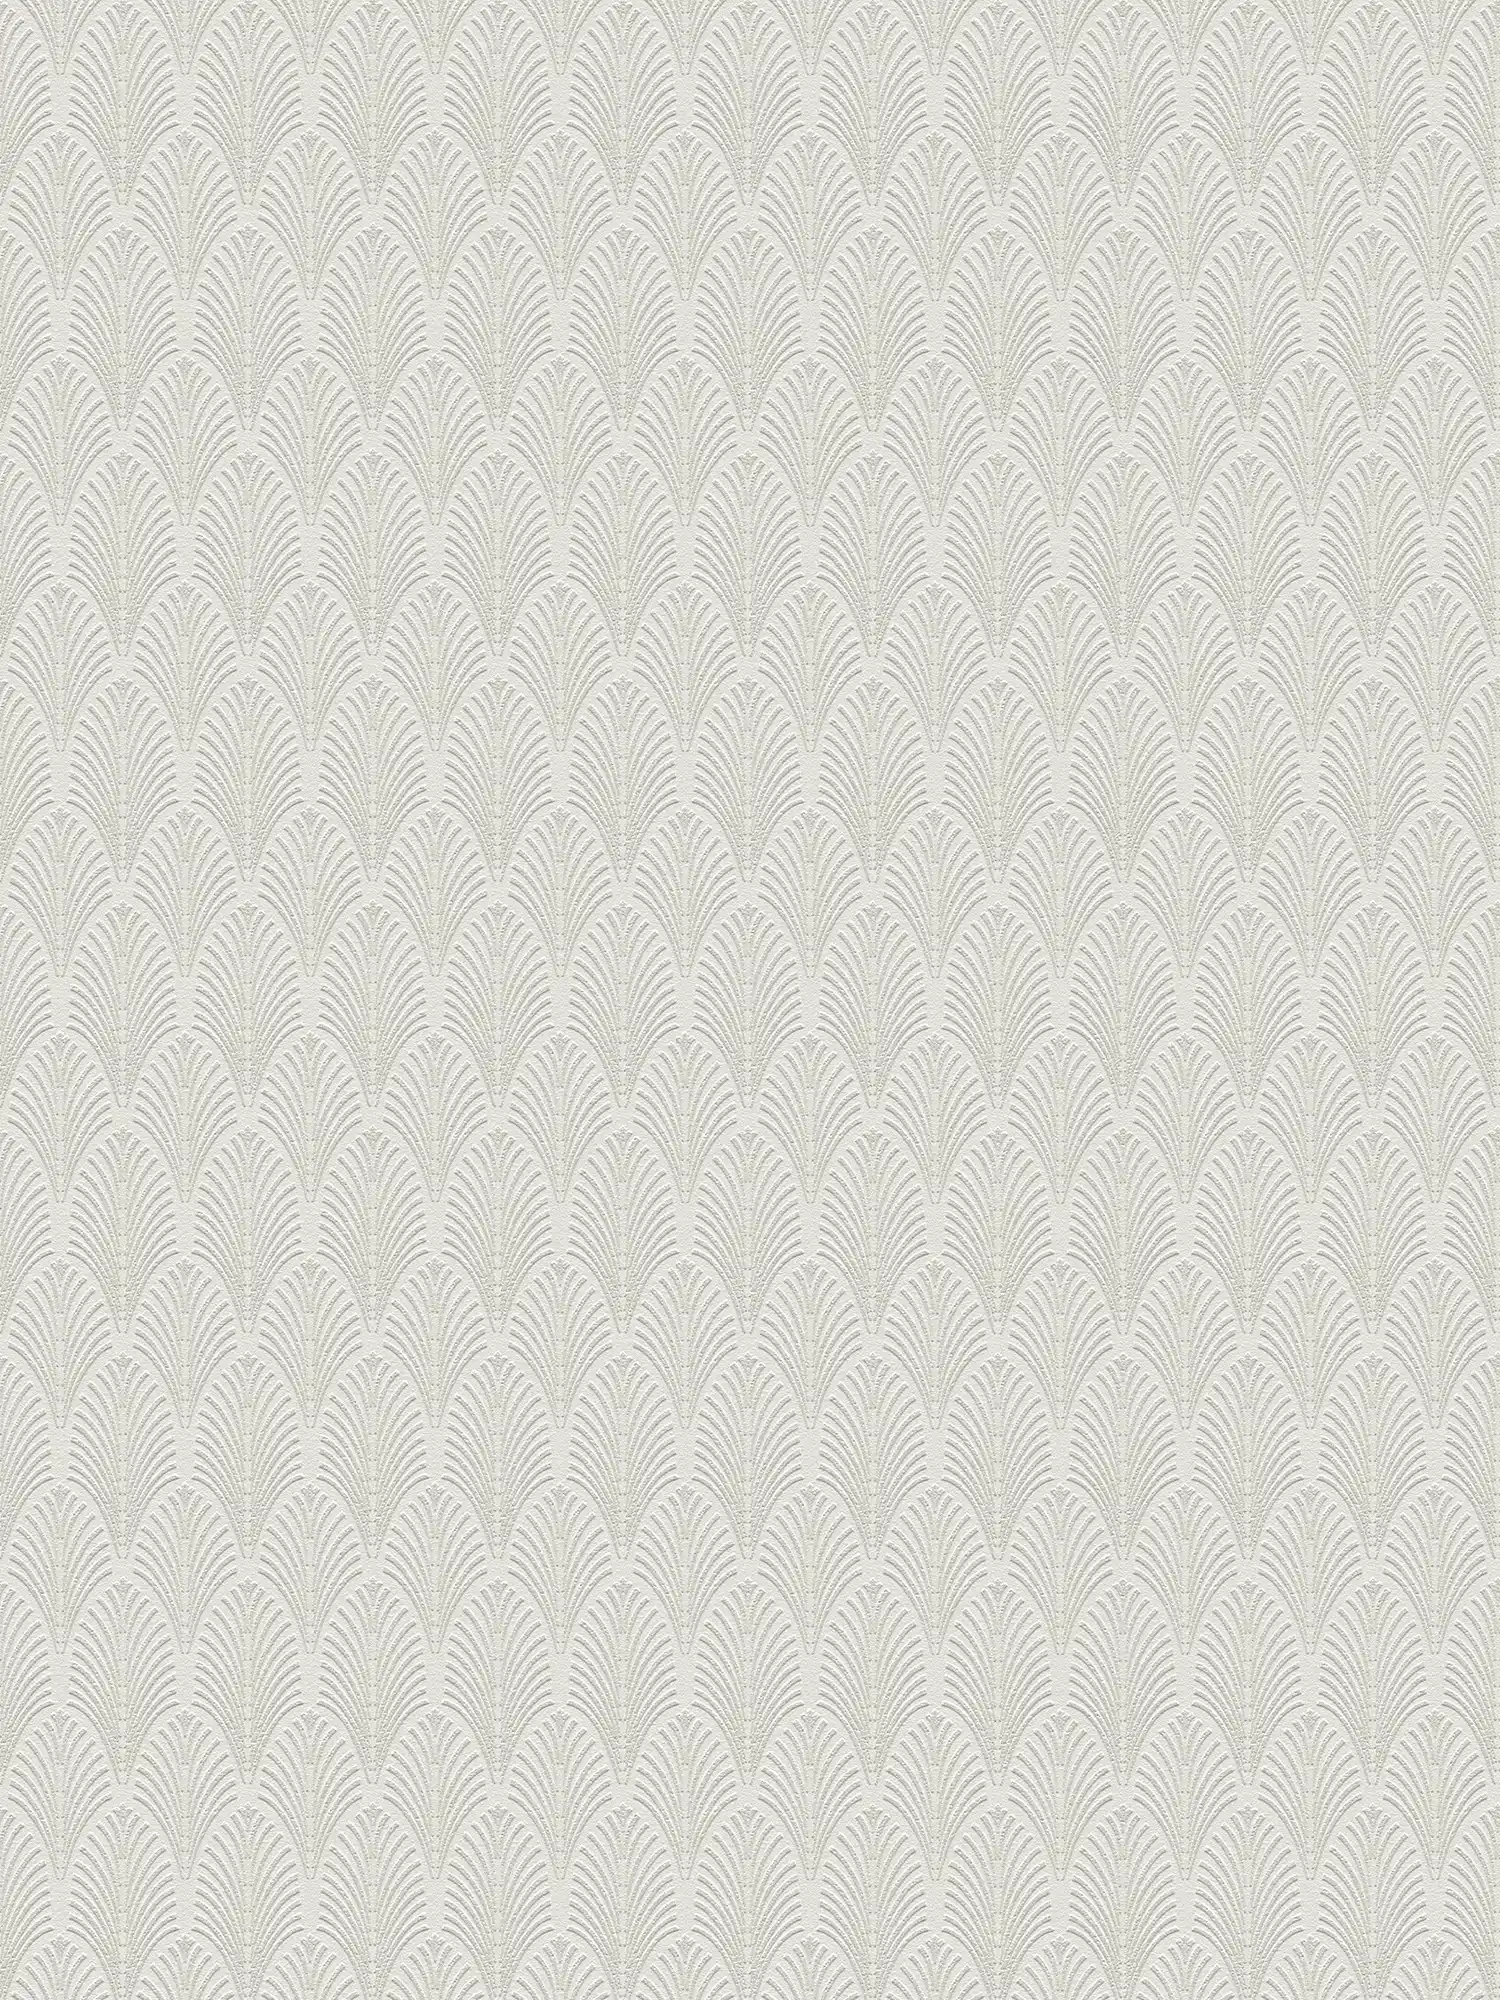 Pattern wallpaper metallic design in art deco style - white, silver
